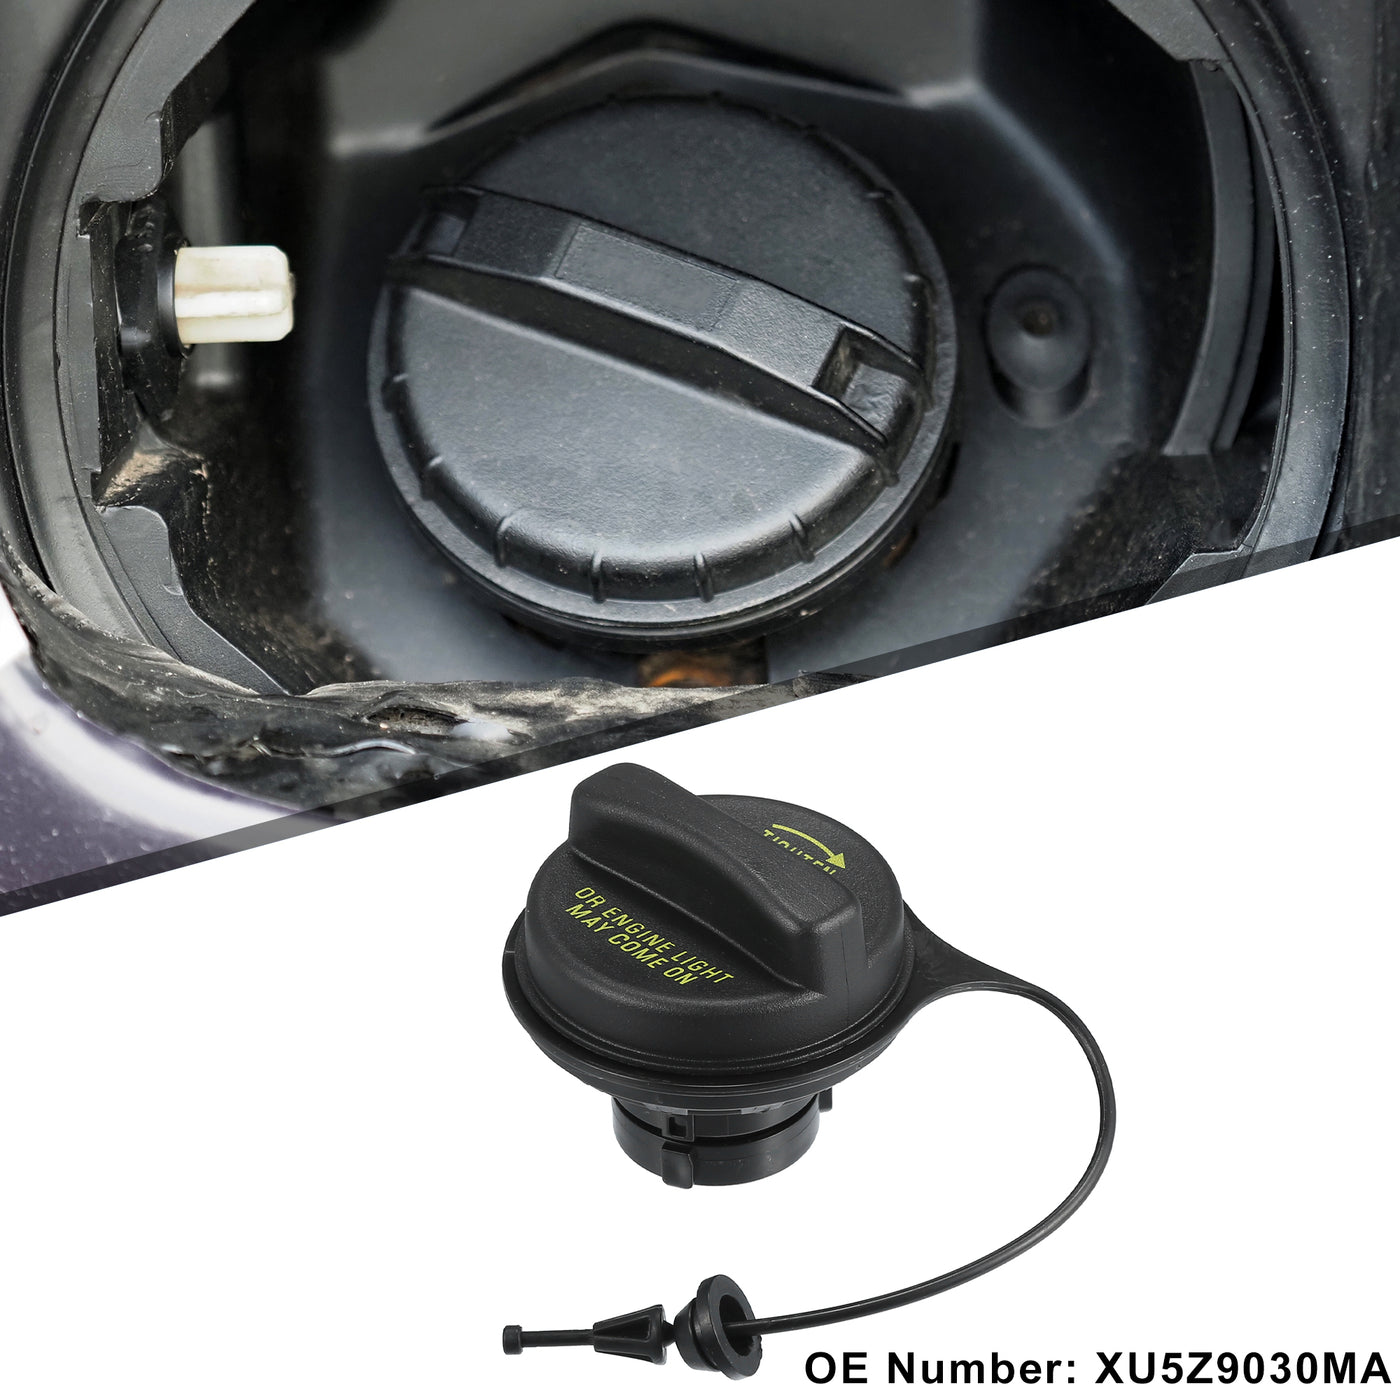 Motoforti Car Fuel Tank Filler Cover, Gas Tank Cap, for Ford Excursion 2000-2005, ABS, No.XU5Z9030MA, Black